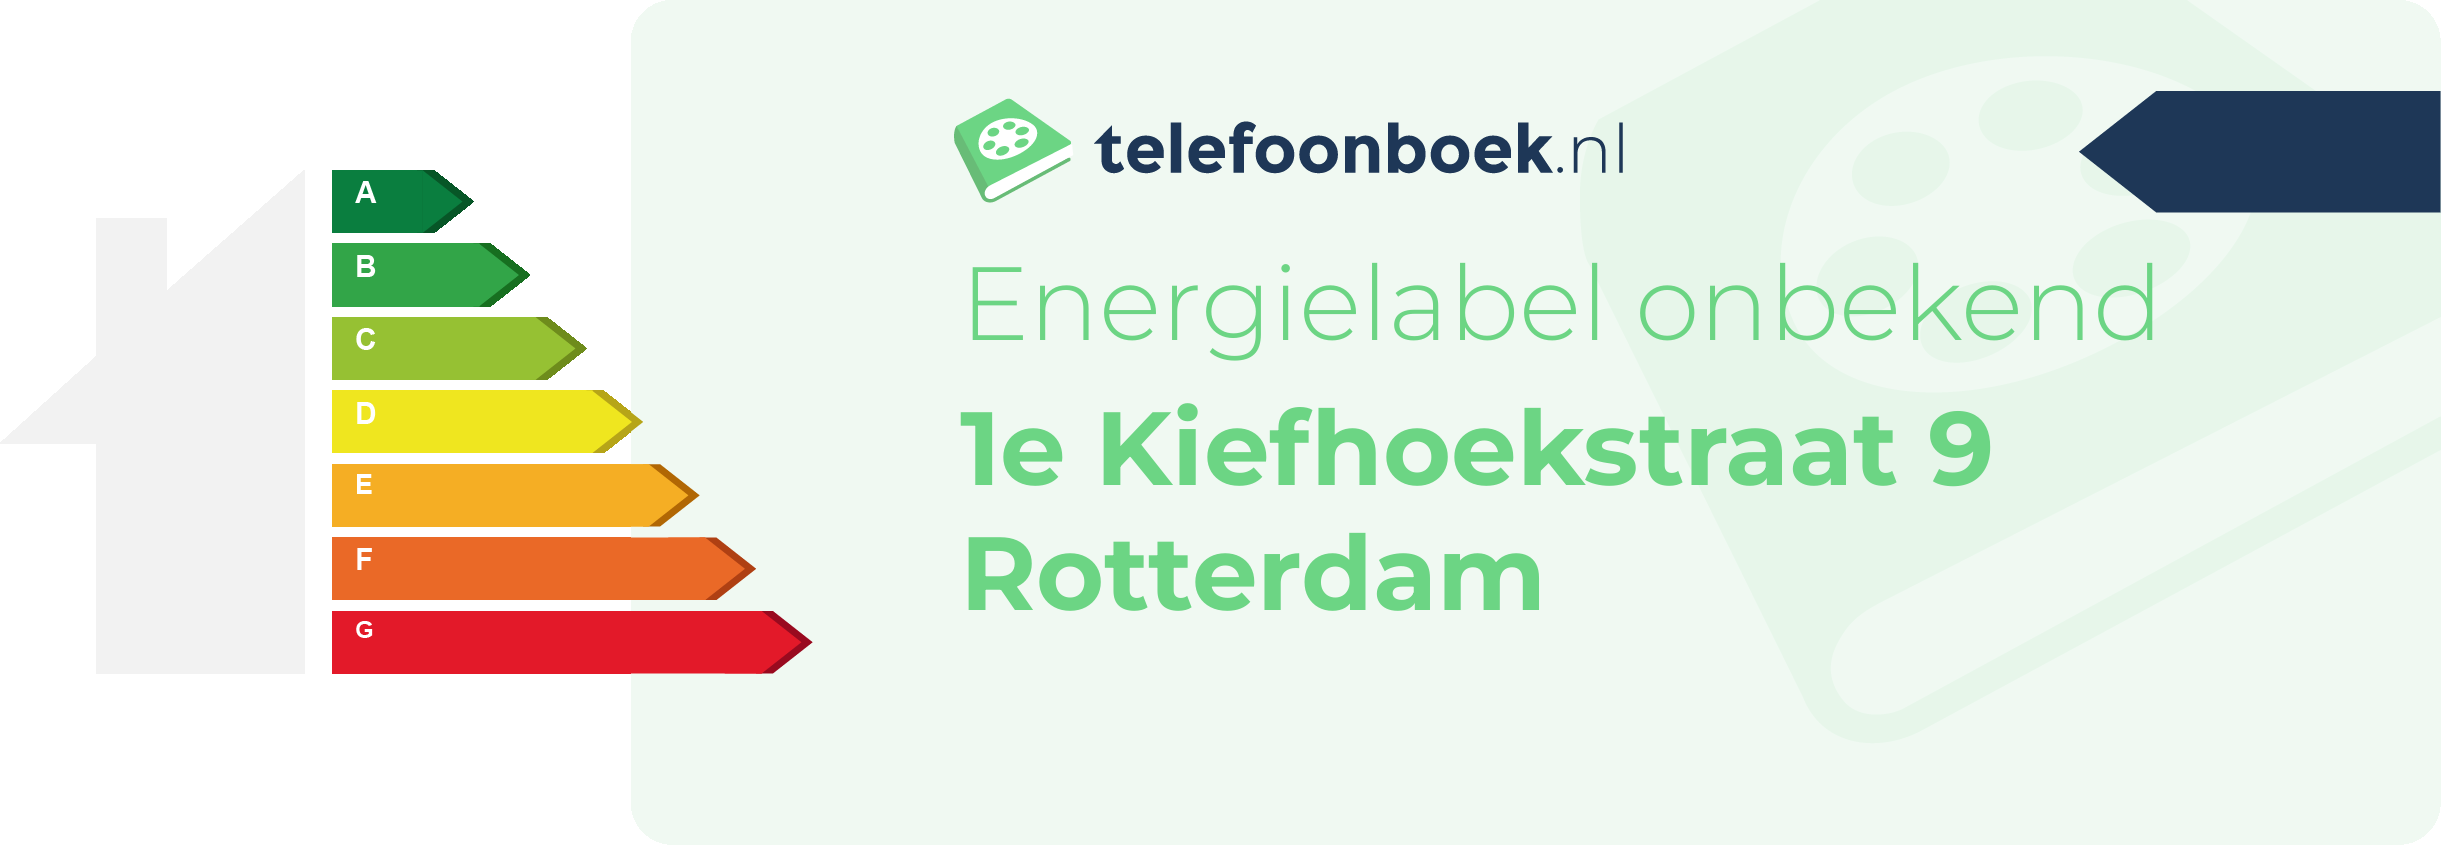 Energielabel 1e Kiefhoekstraat 9 Rotterdam